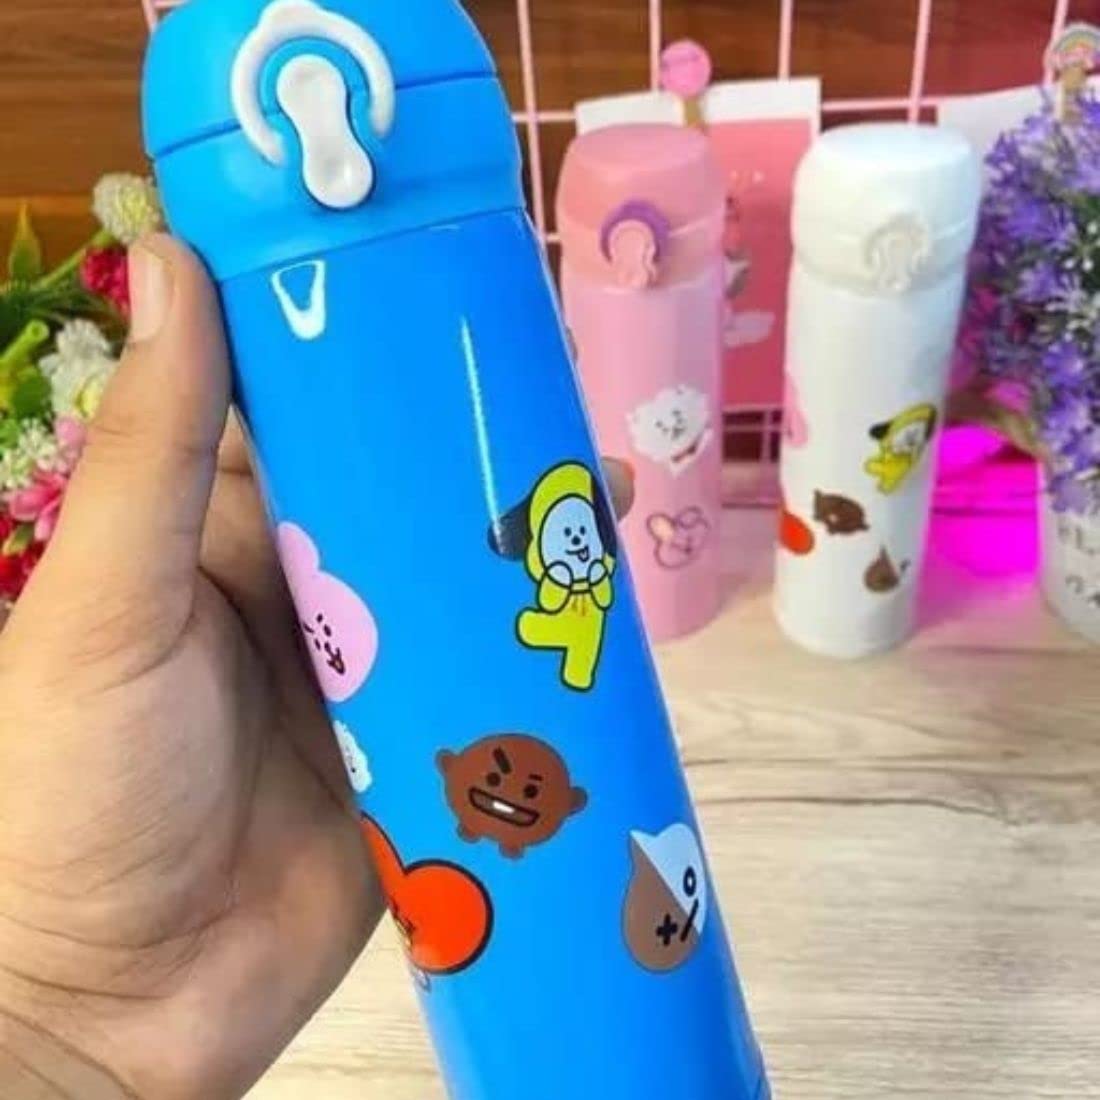 BTS Theme Multicolor Stainless Steel Water Bottle Vacuum Flask Leak-Proof Bottle for School Kids Girls Adults Travel Gym Water Bottle (500 ML)- 1 Unit (Pink)